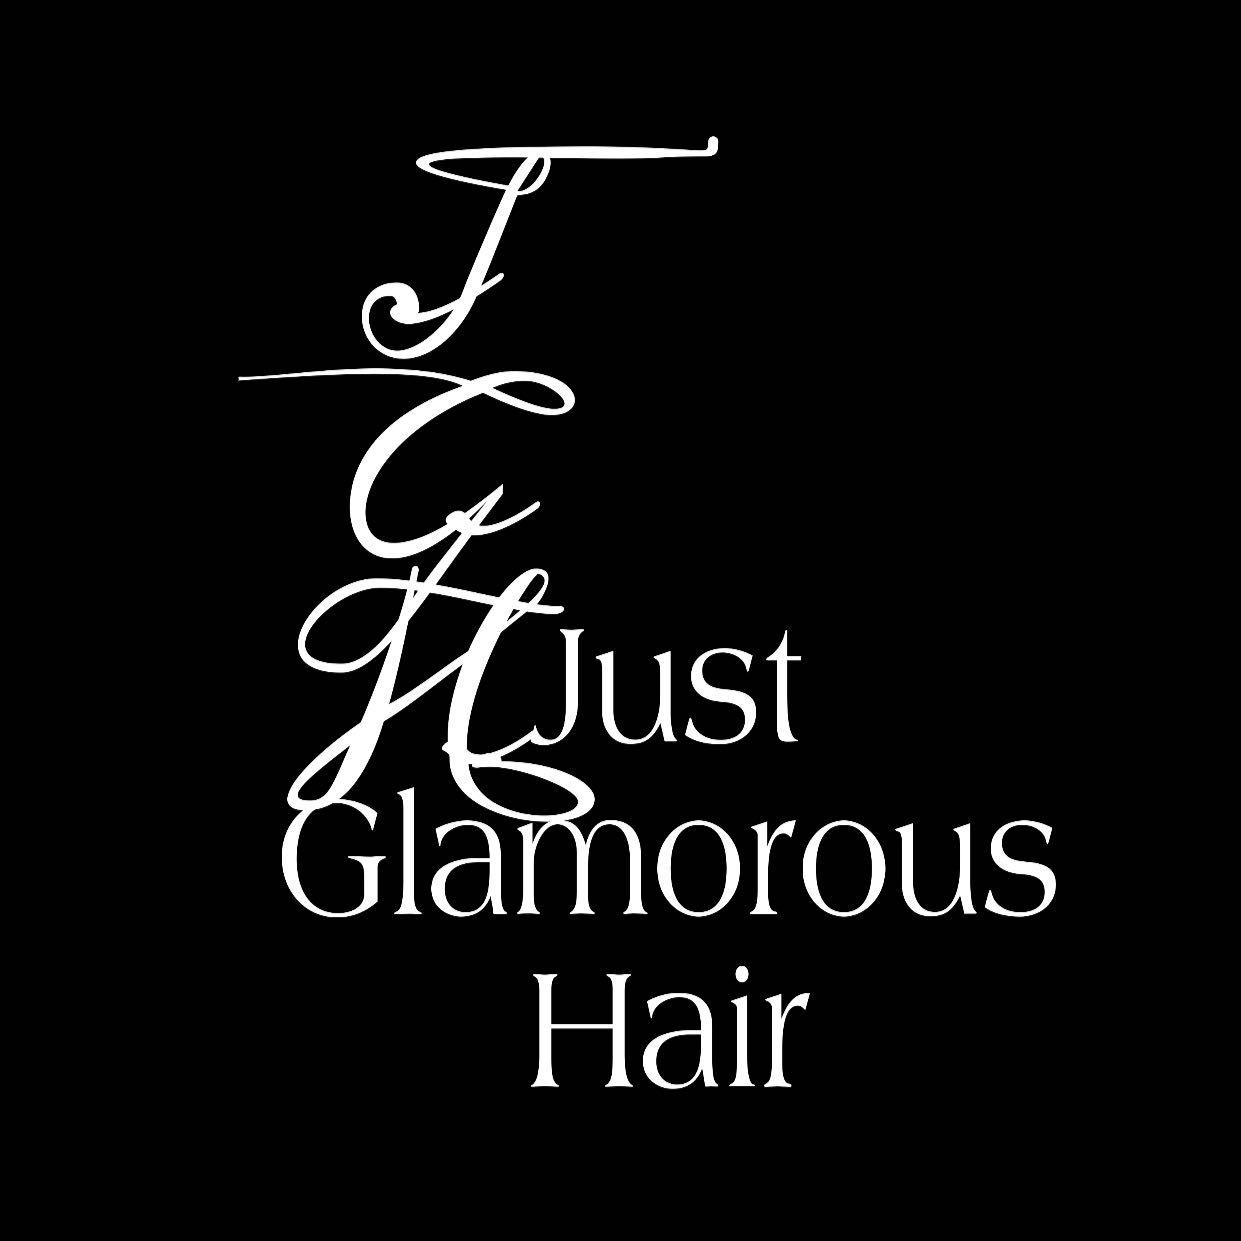 Just Glamorous Hair, 13718 Hull Street Rd, Midlothian, 23112